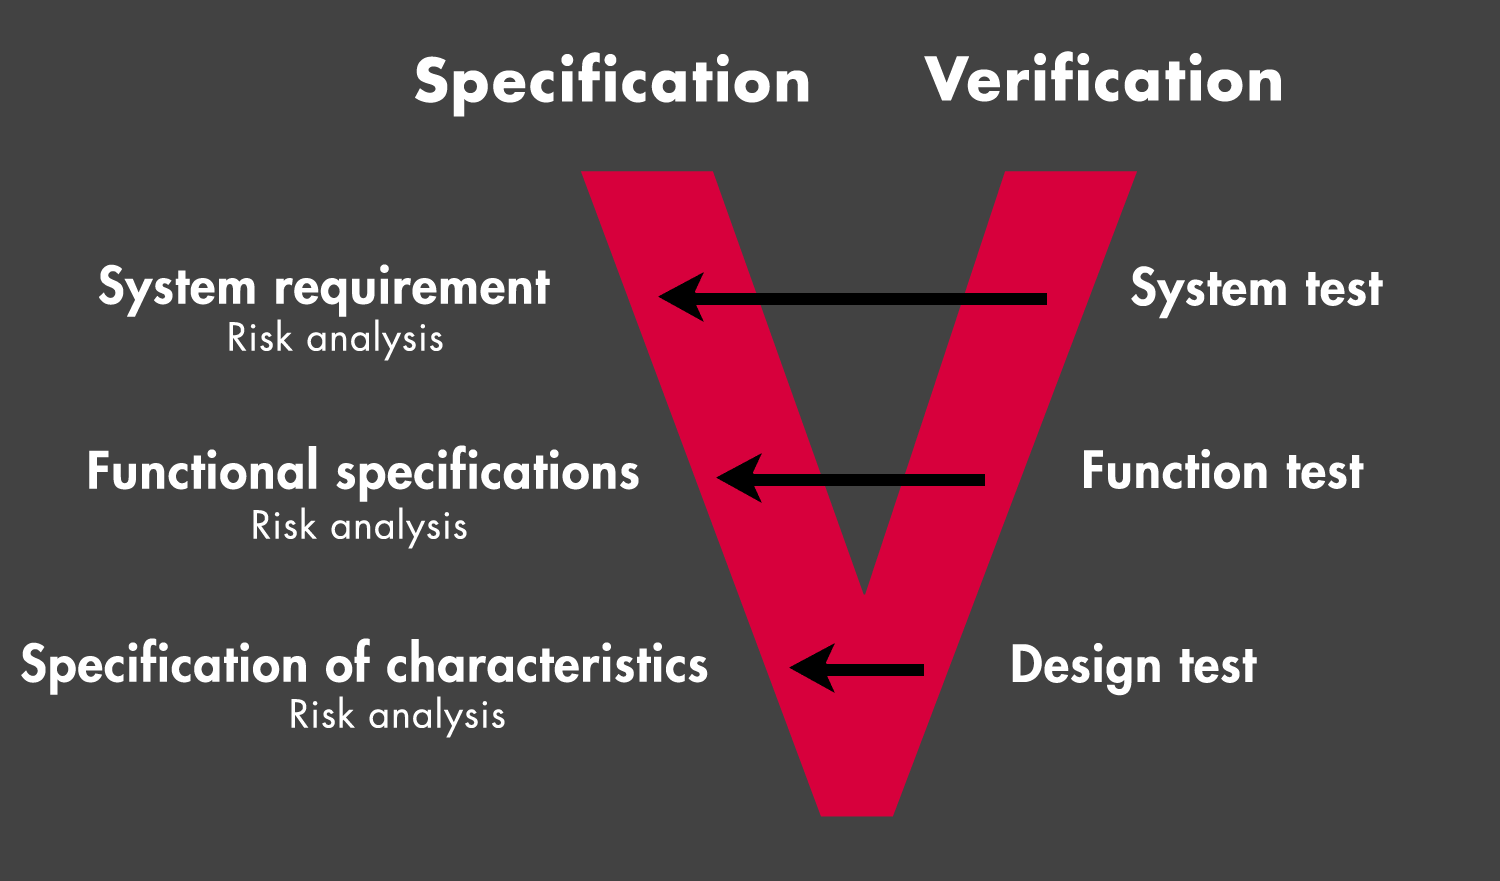 Image explanation for design verification